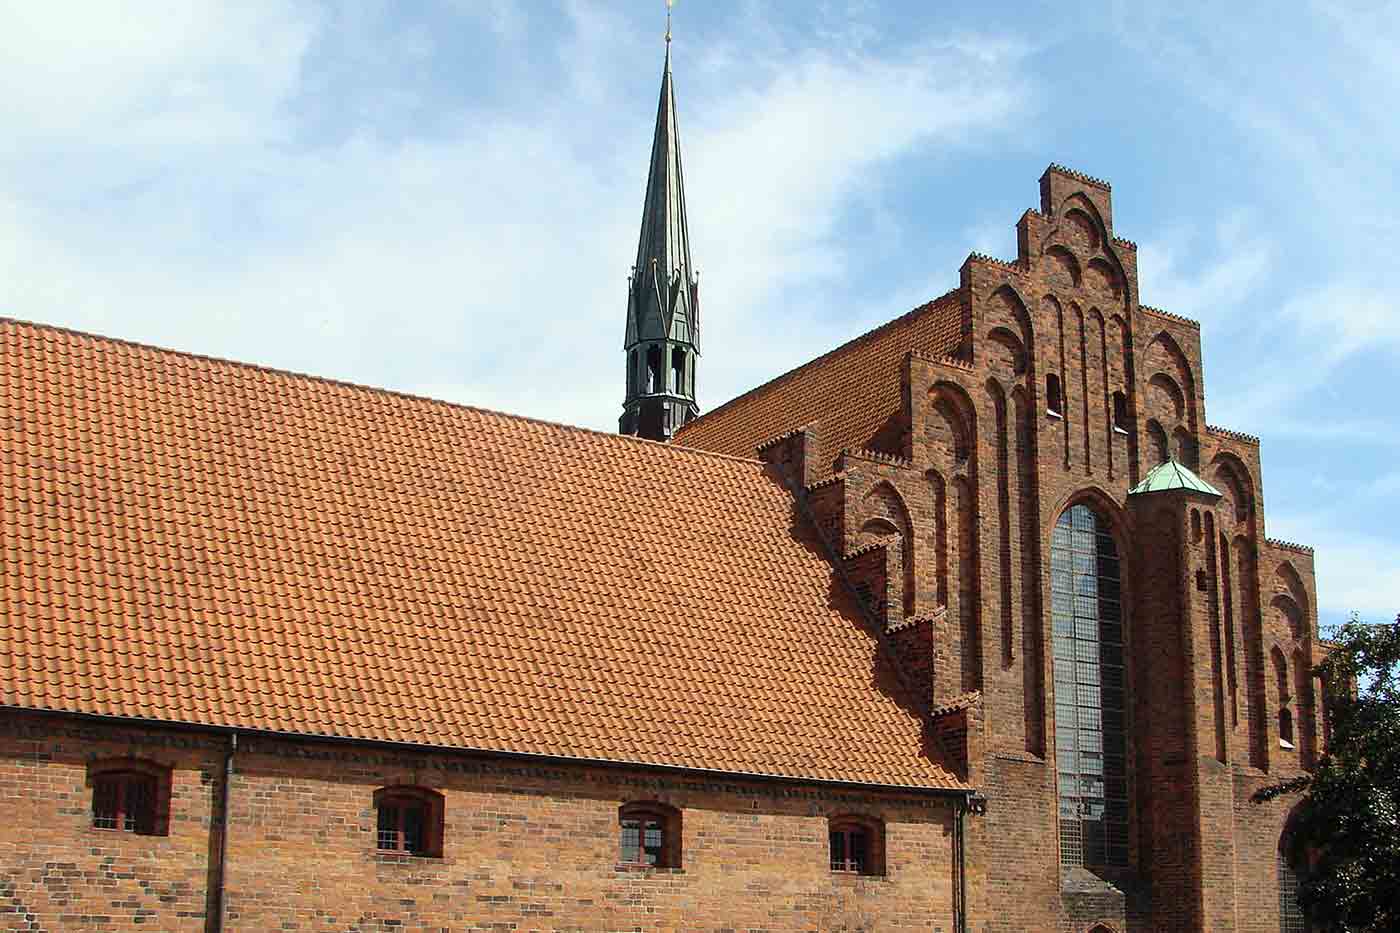 Carmelite Priory and St. Mary's Church